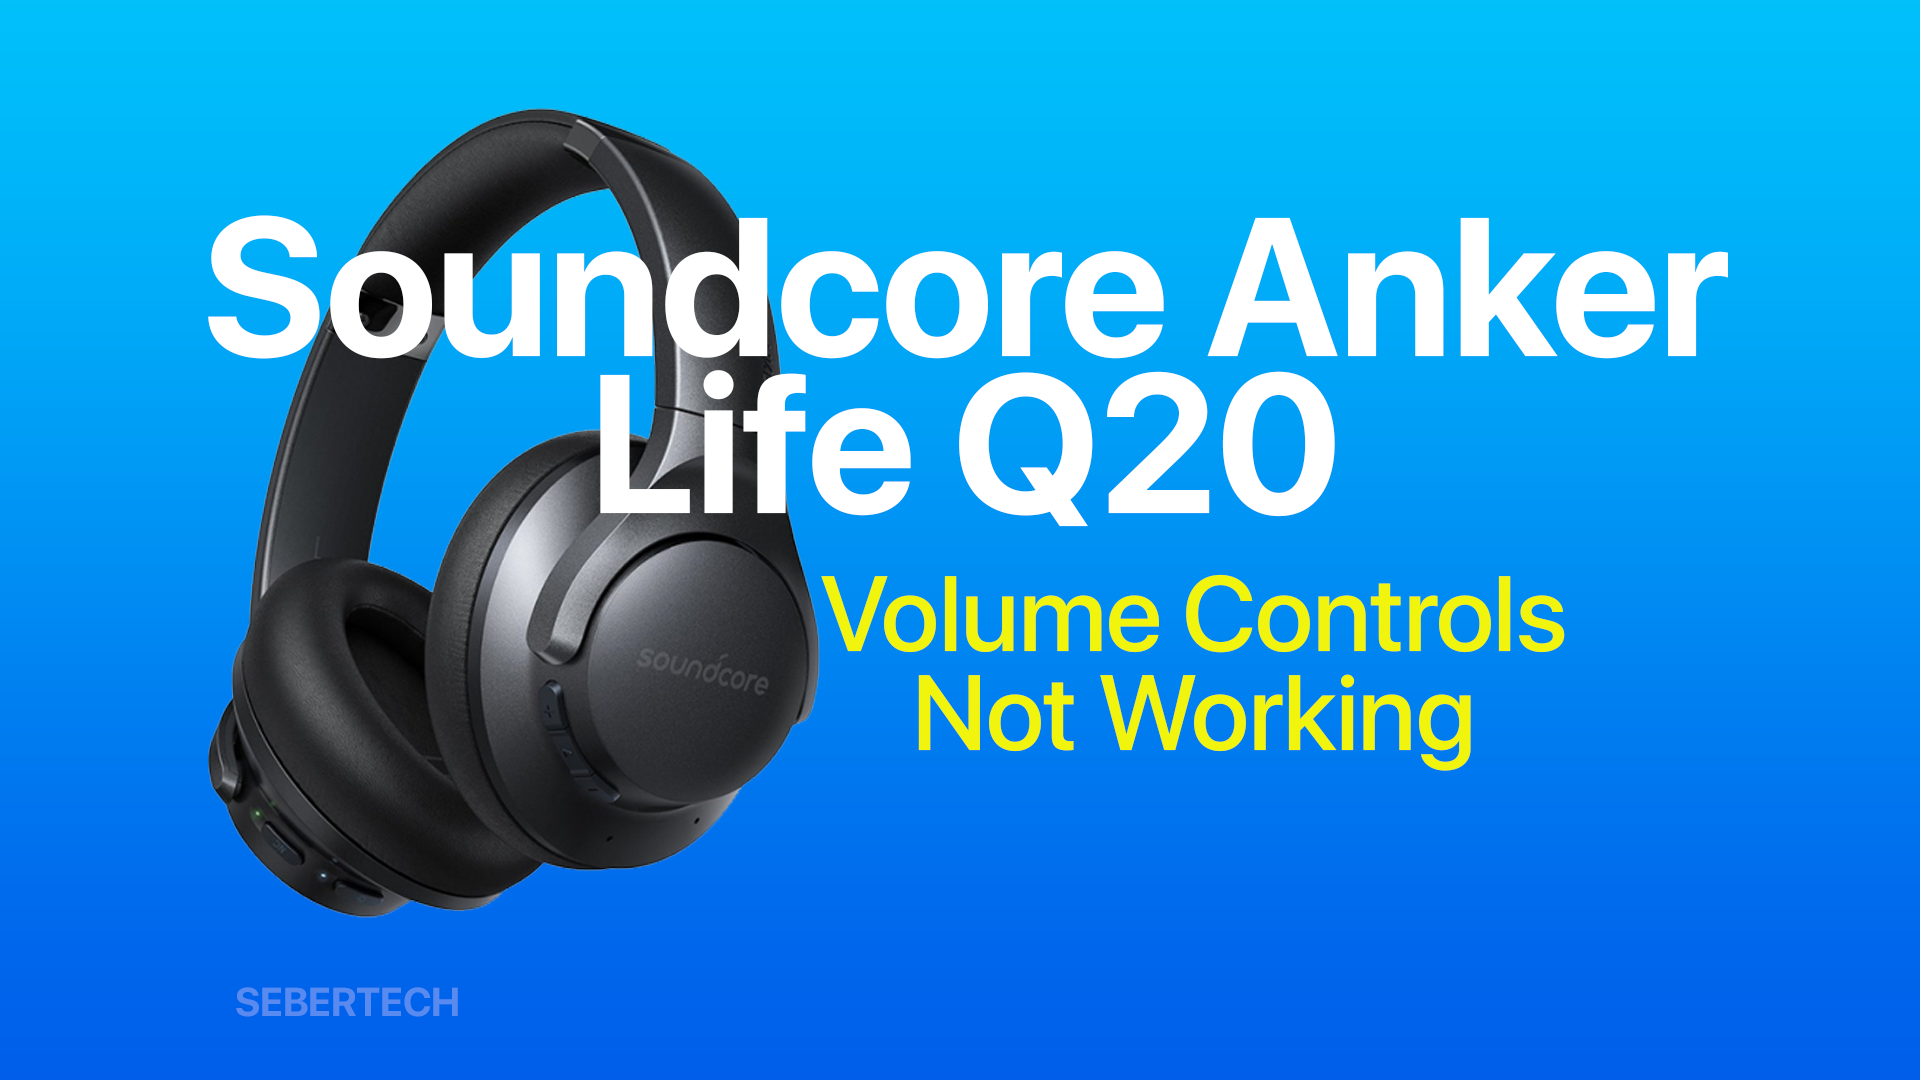 Volume Playback Controls Not Working on Soundcore Anker Life Q20 Headphones